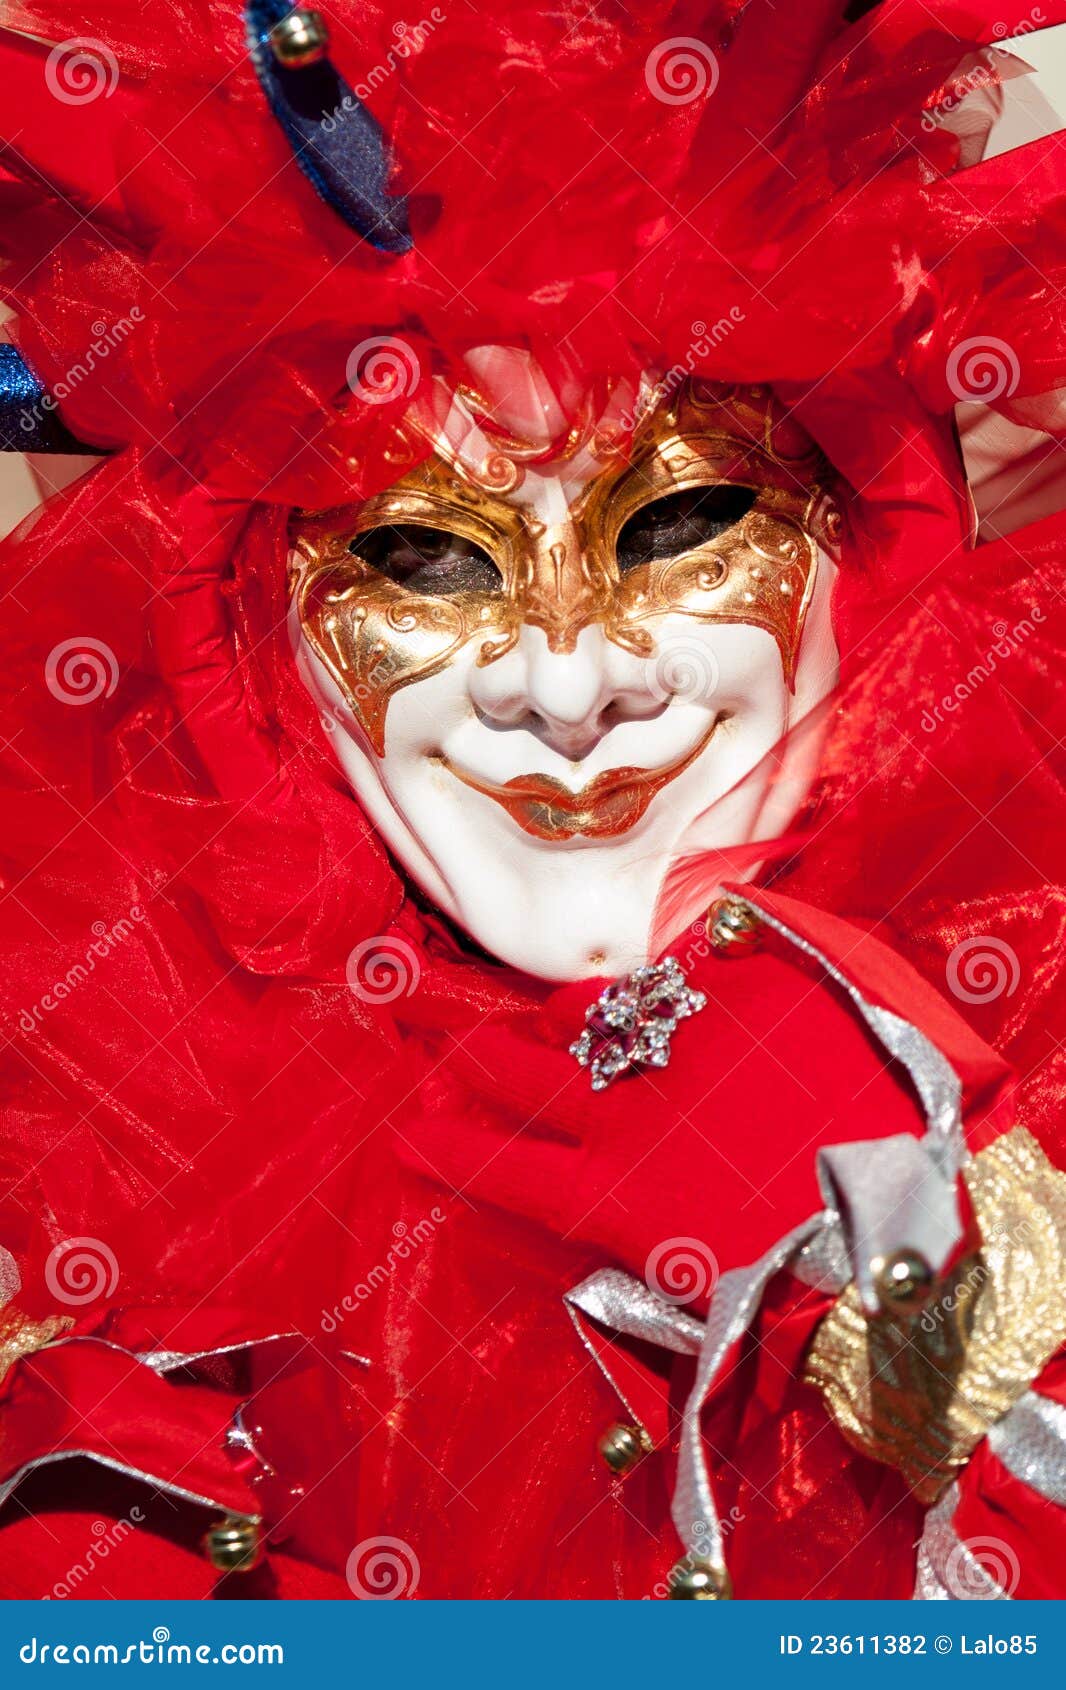 Joker Red mask stock photo. Image of female, beauty, costume - 23611382